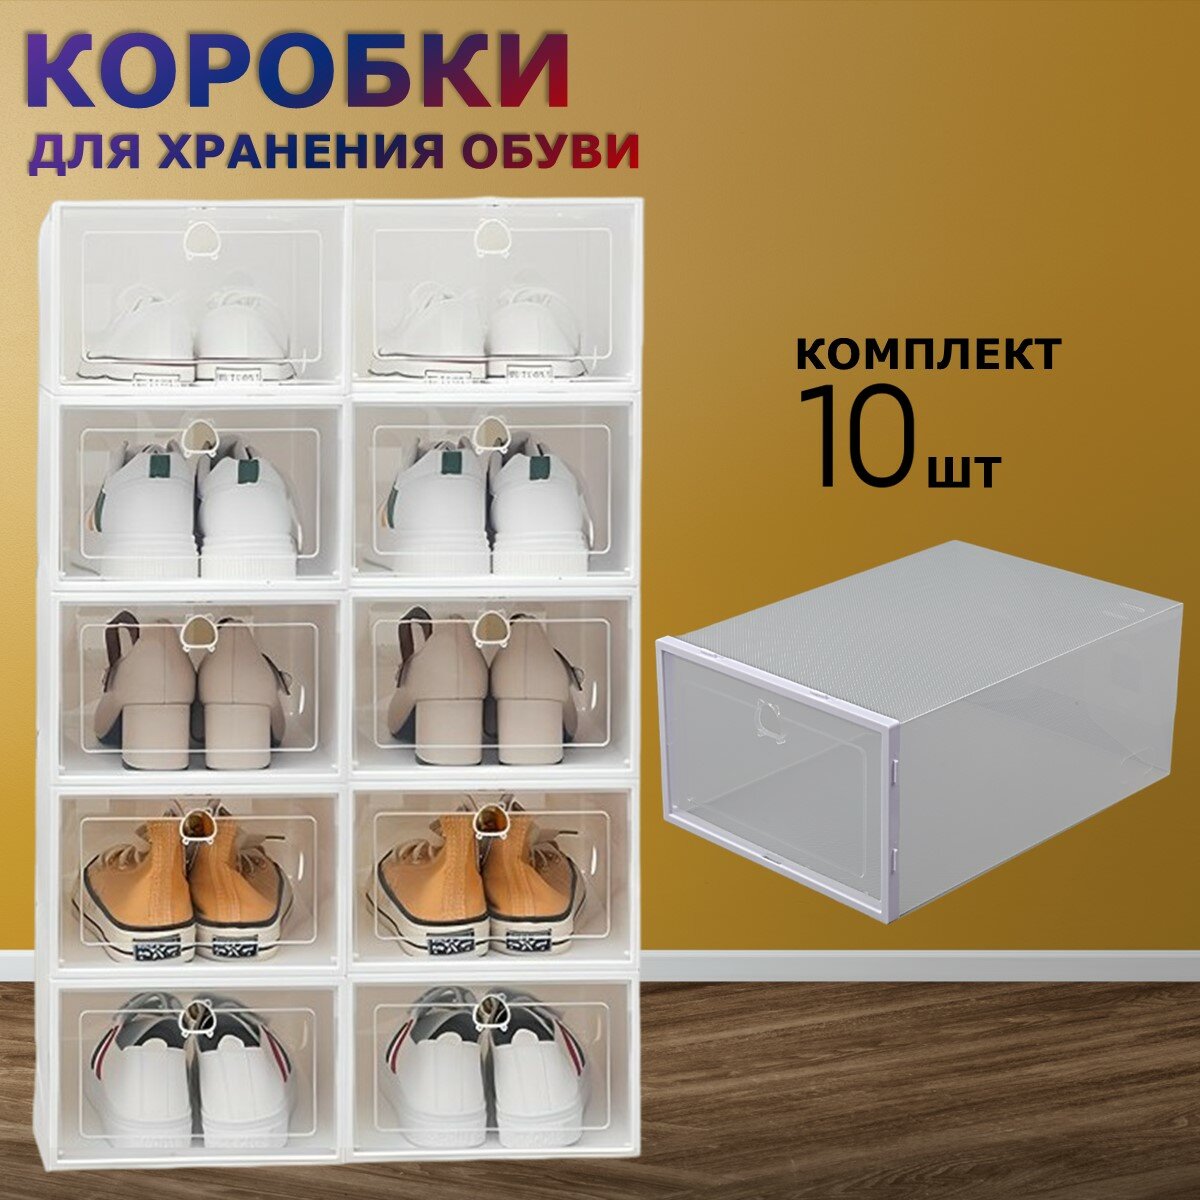 Коробки для хранения обуви Ridberg набор 10 шт ящики для хранения вещей